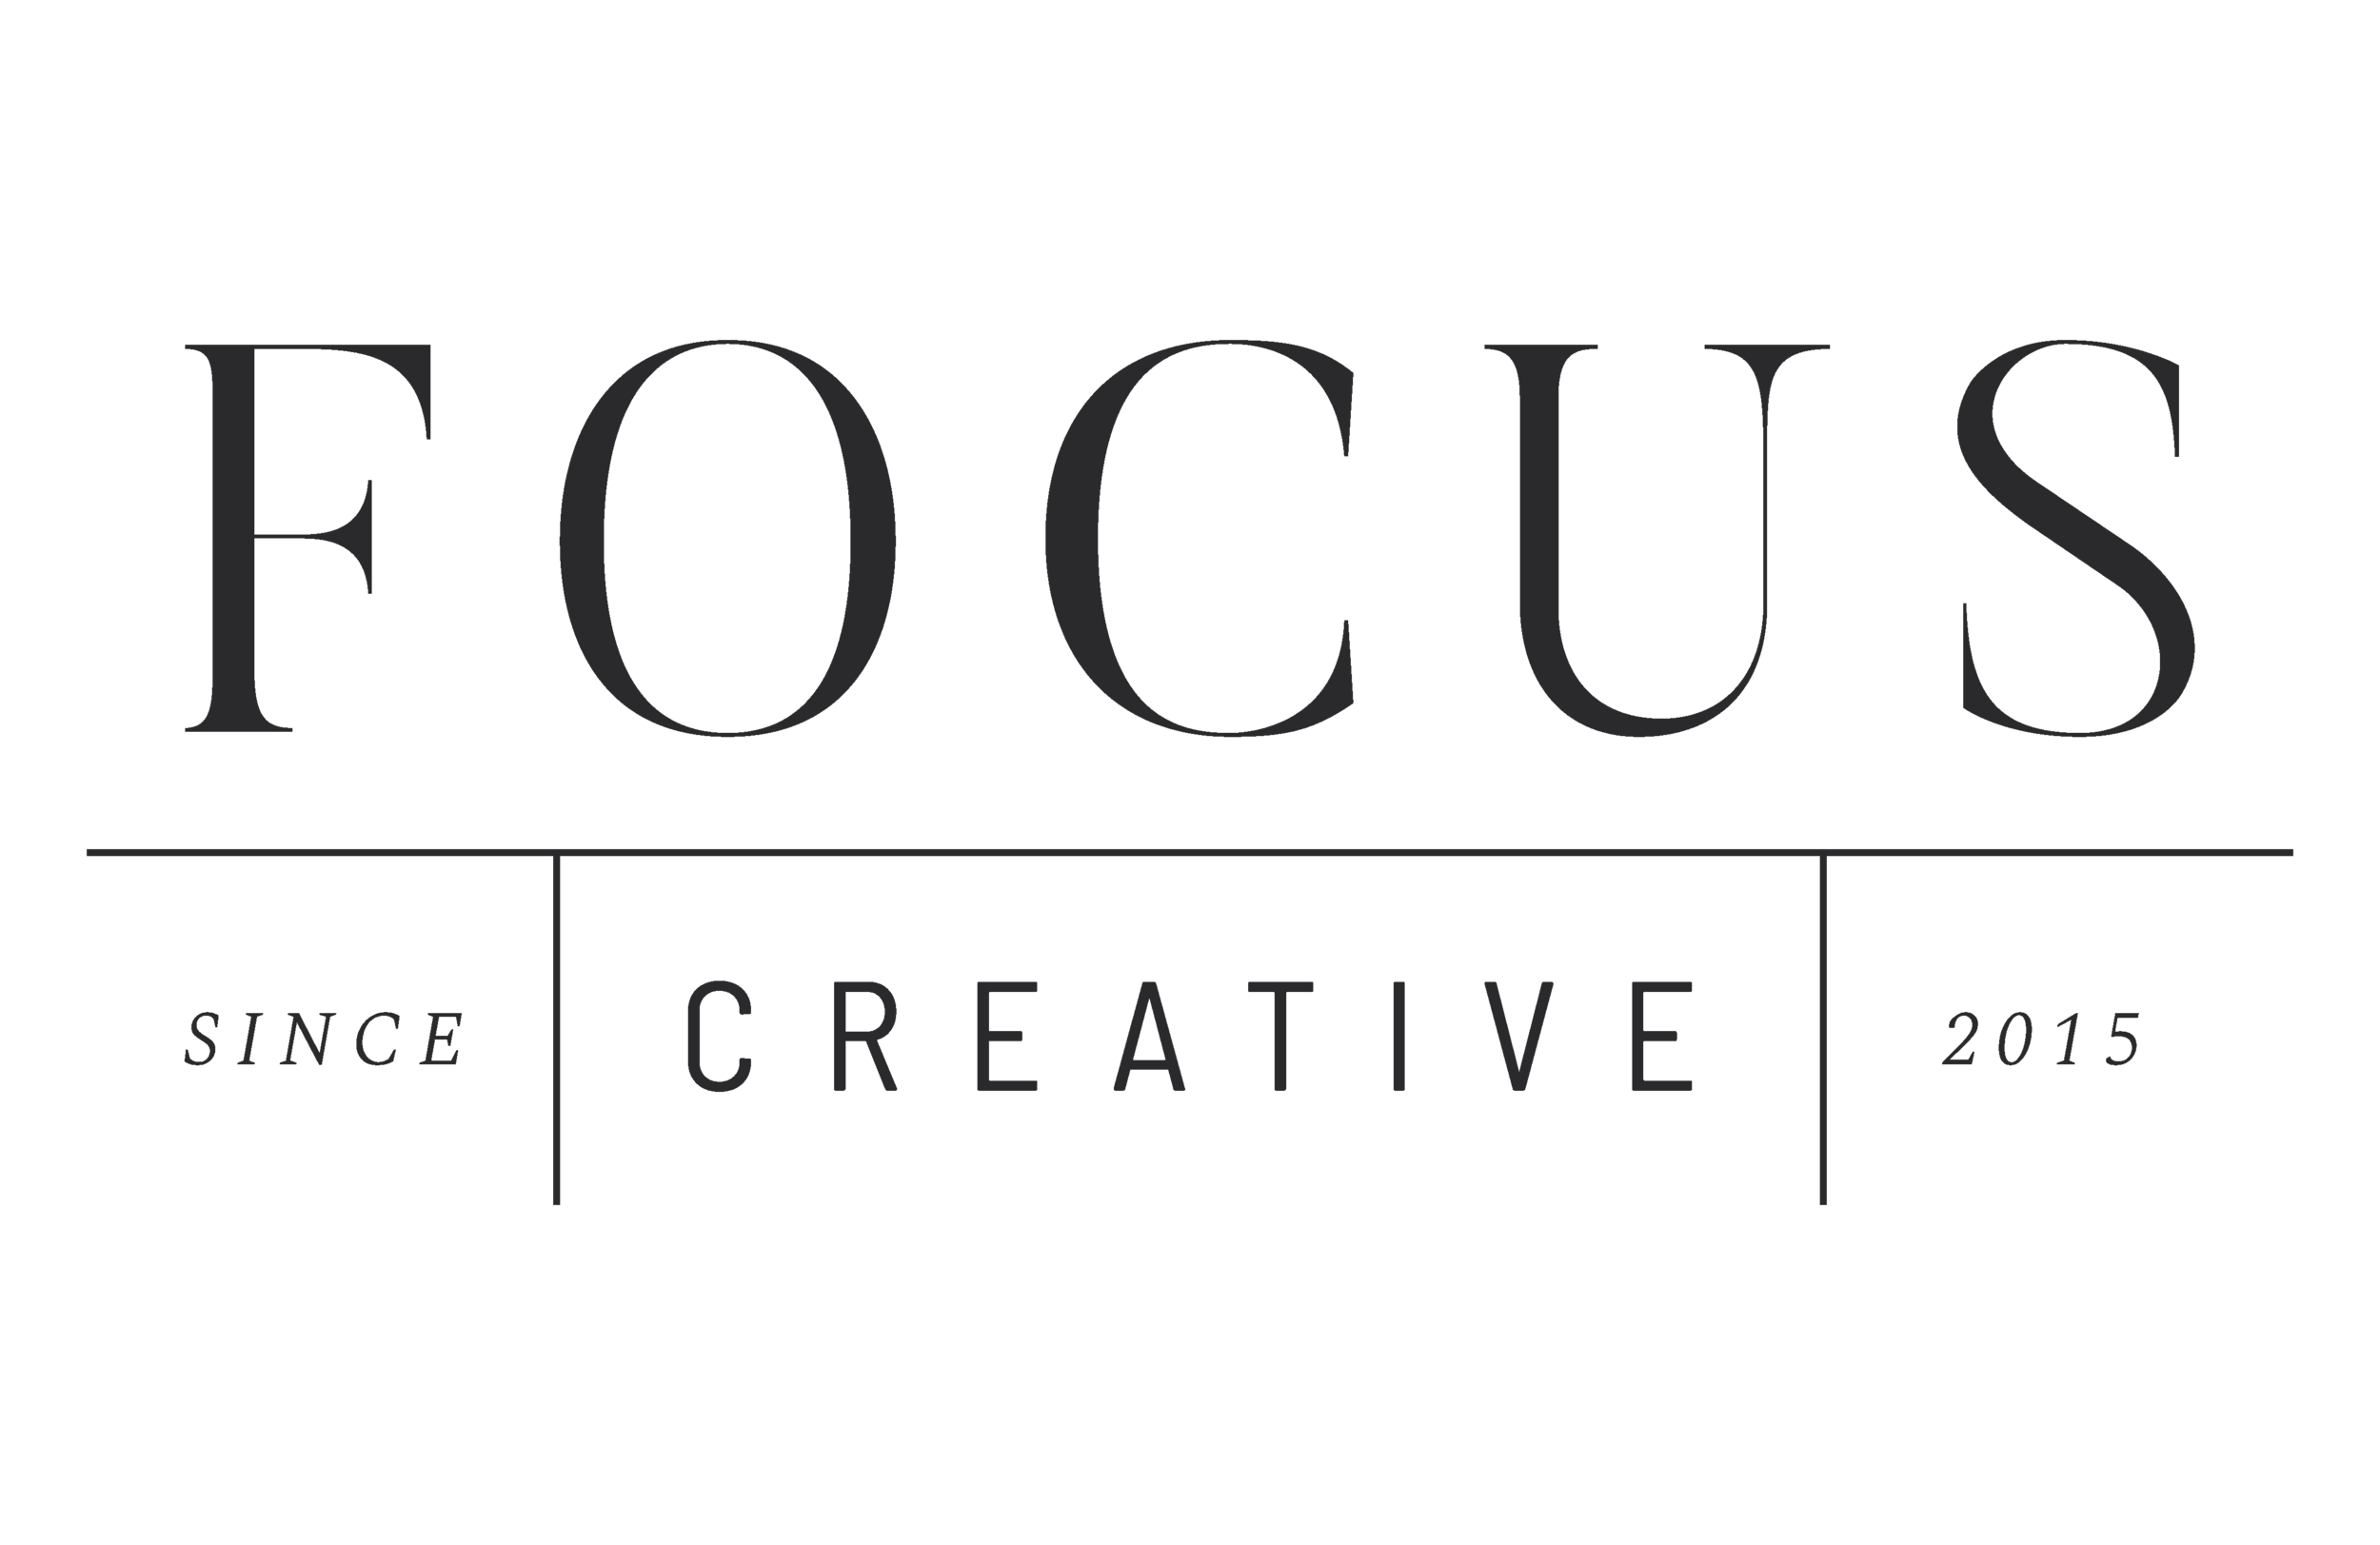 focus-creative-commercial-photographer-logo.png